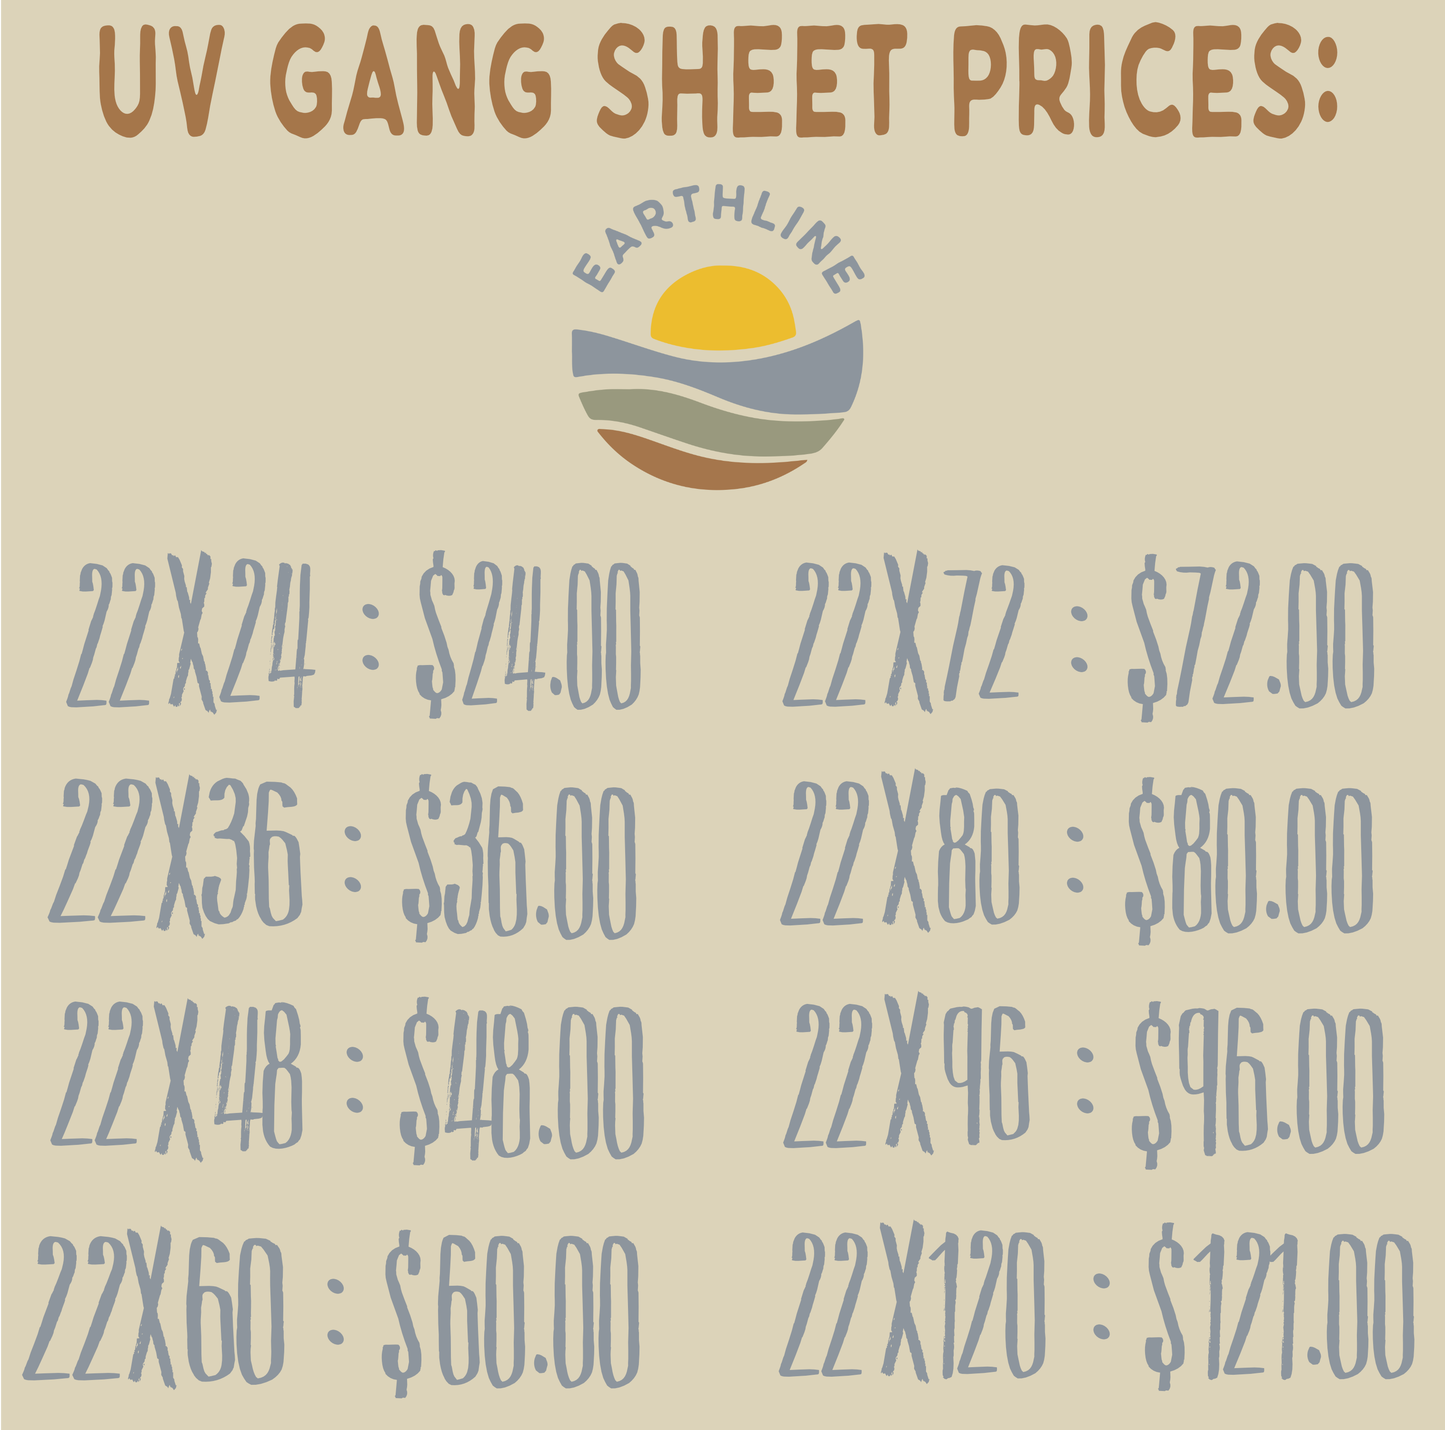 Send us you UV Gang Sheet